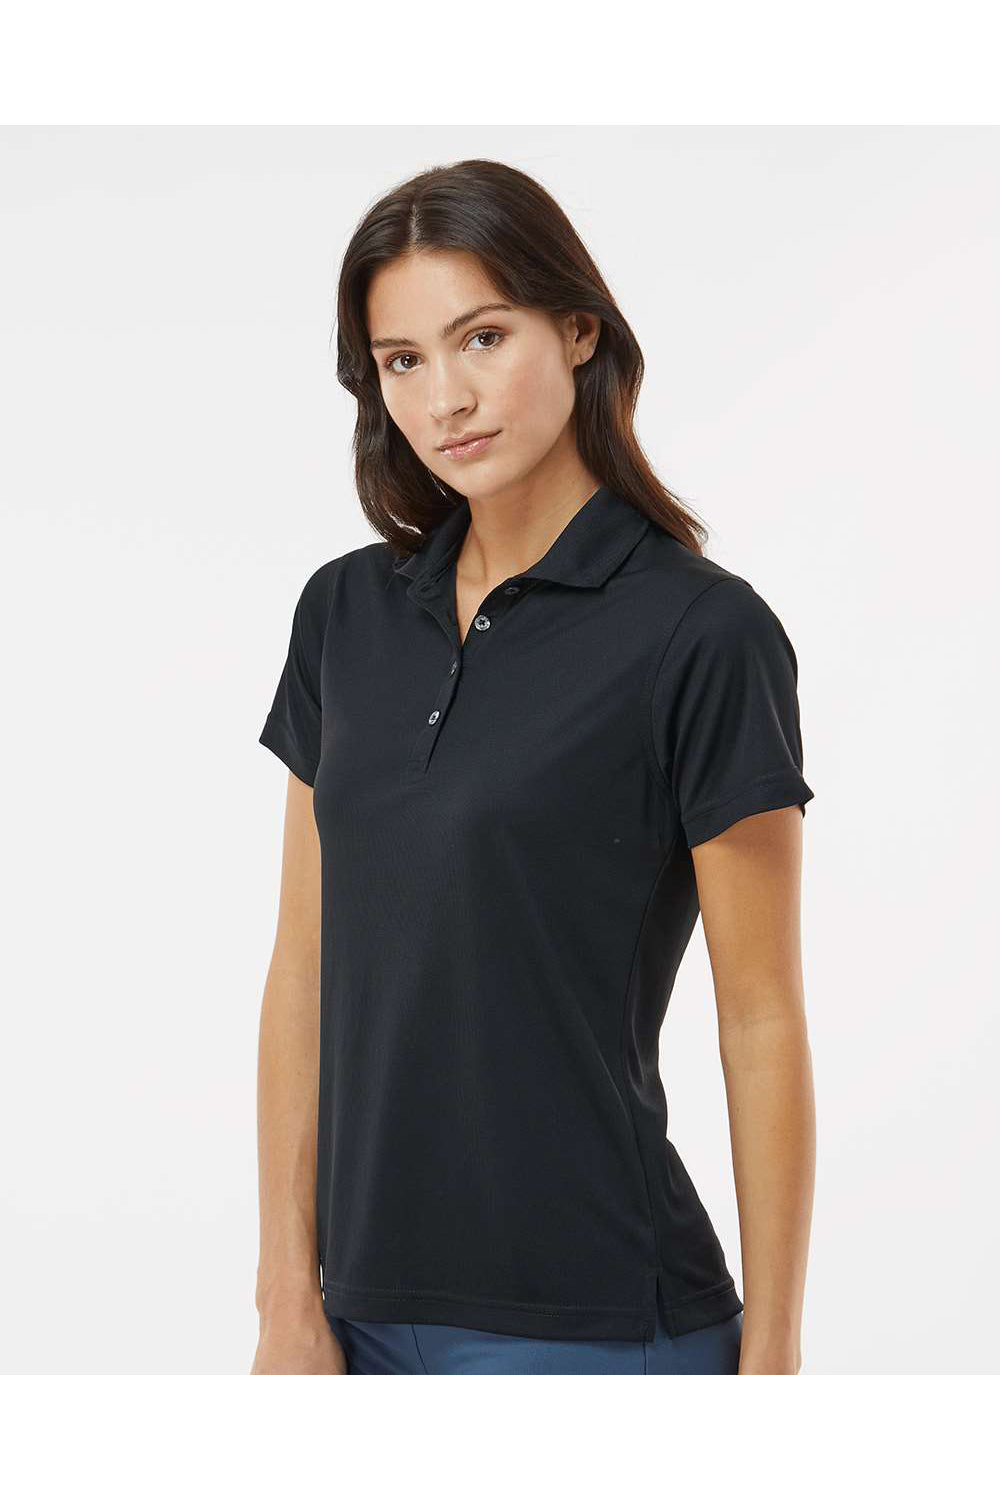 Paragon 104 Womens Saratoga Performance Mini Mesh Short Sleeve Polo Shirt Black Model Side